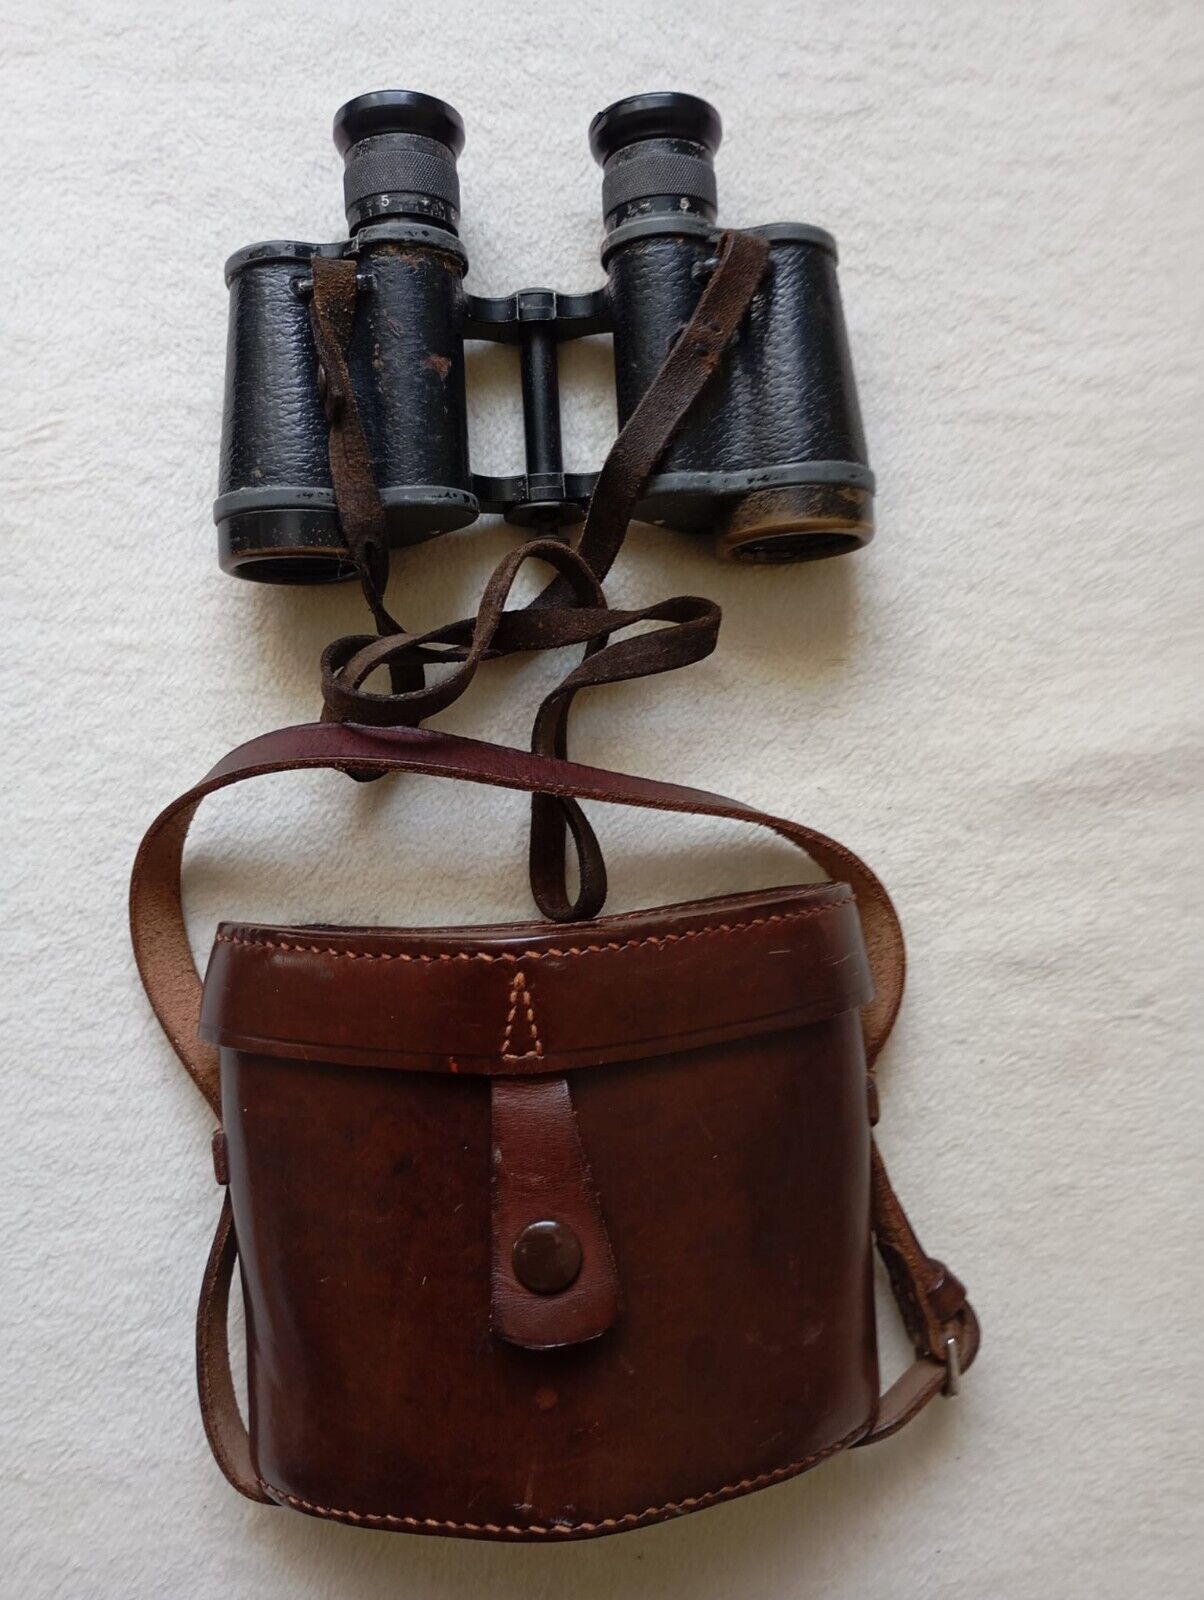 Vintage Binoculars Carl Zeiss/1910-1930s/First World War period.Made in Germany